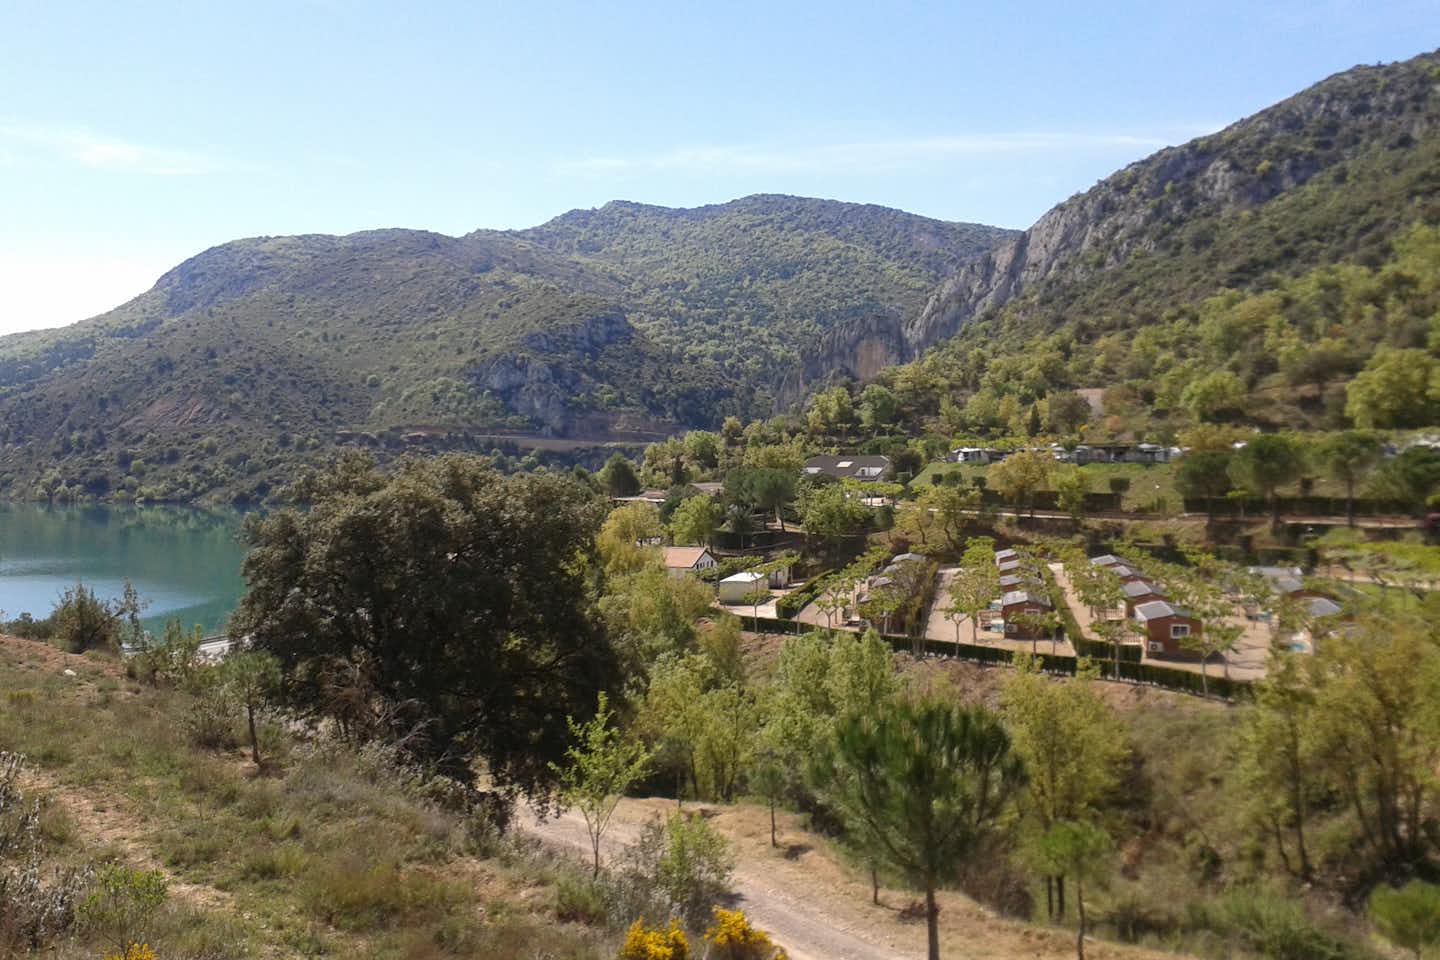 Camping Bellavista - Blick auf den Campingplatz am Wasser